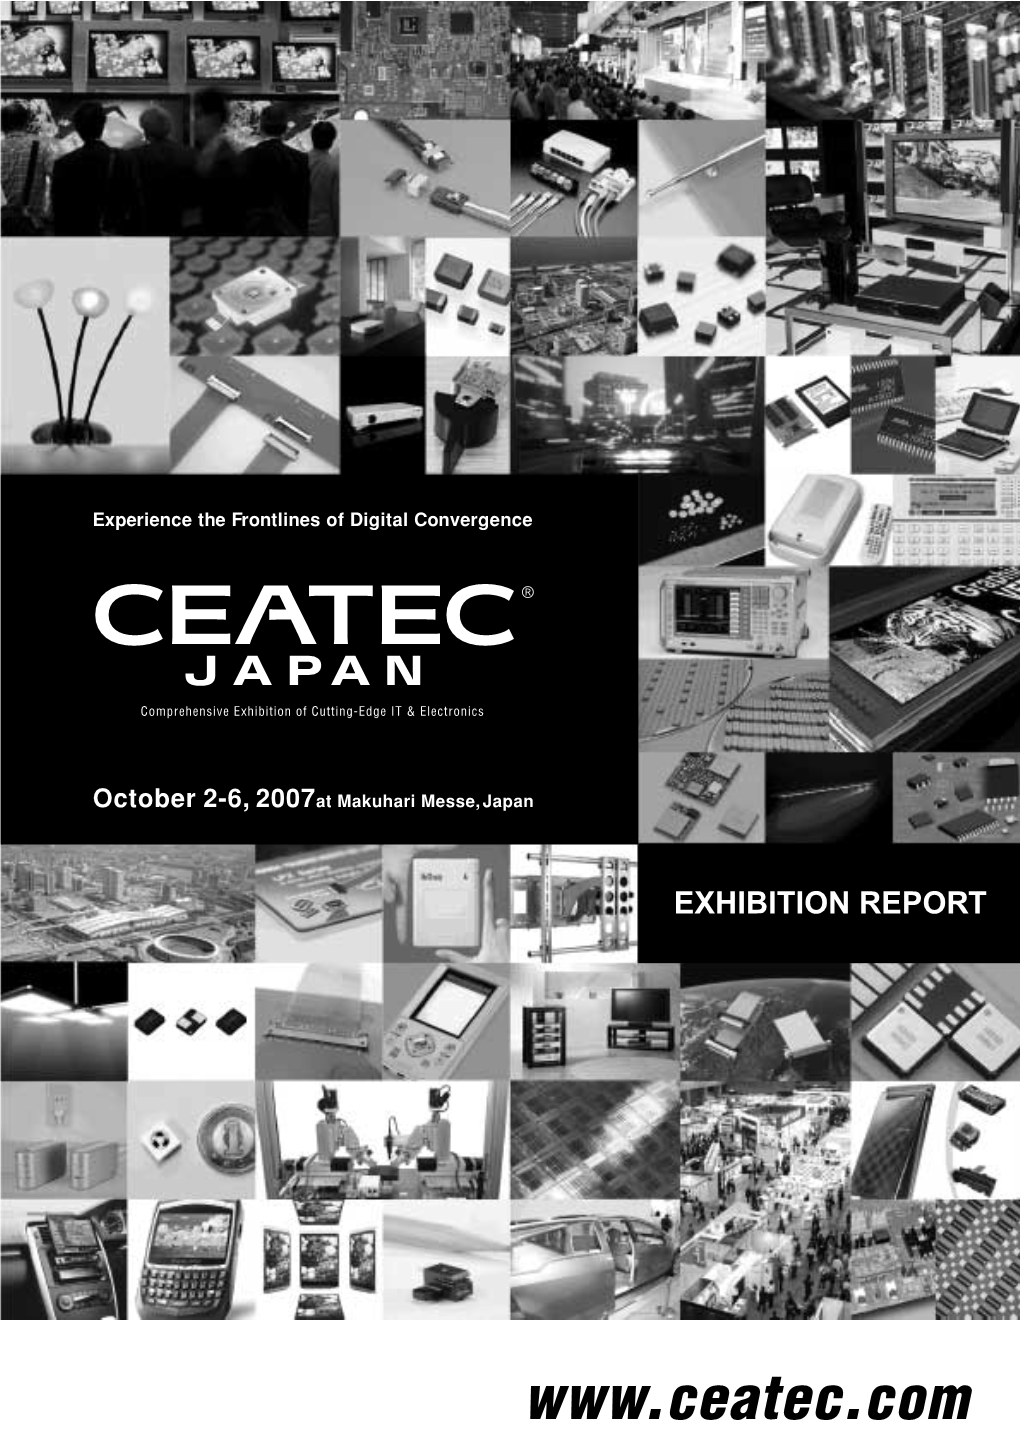 CEATEC JAPAN 2007 Exhibition Report